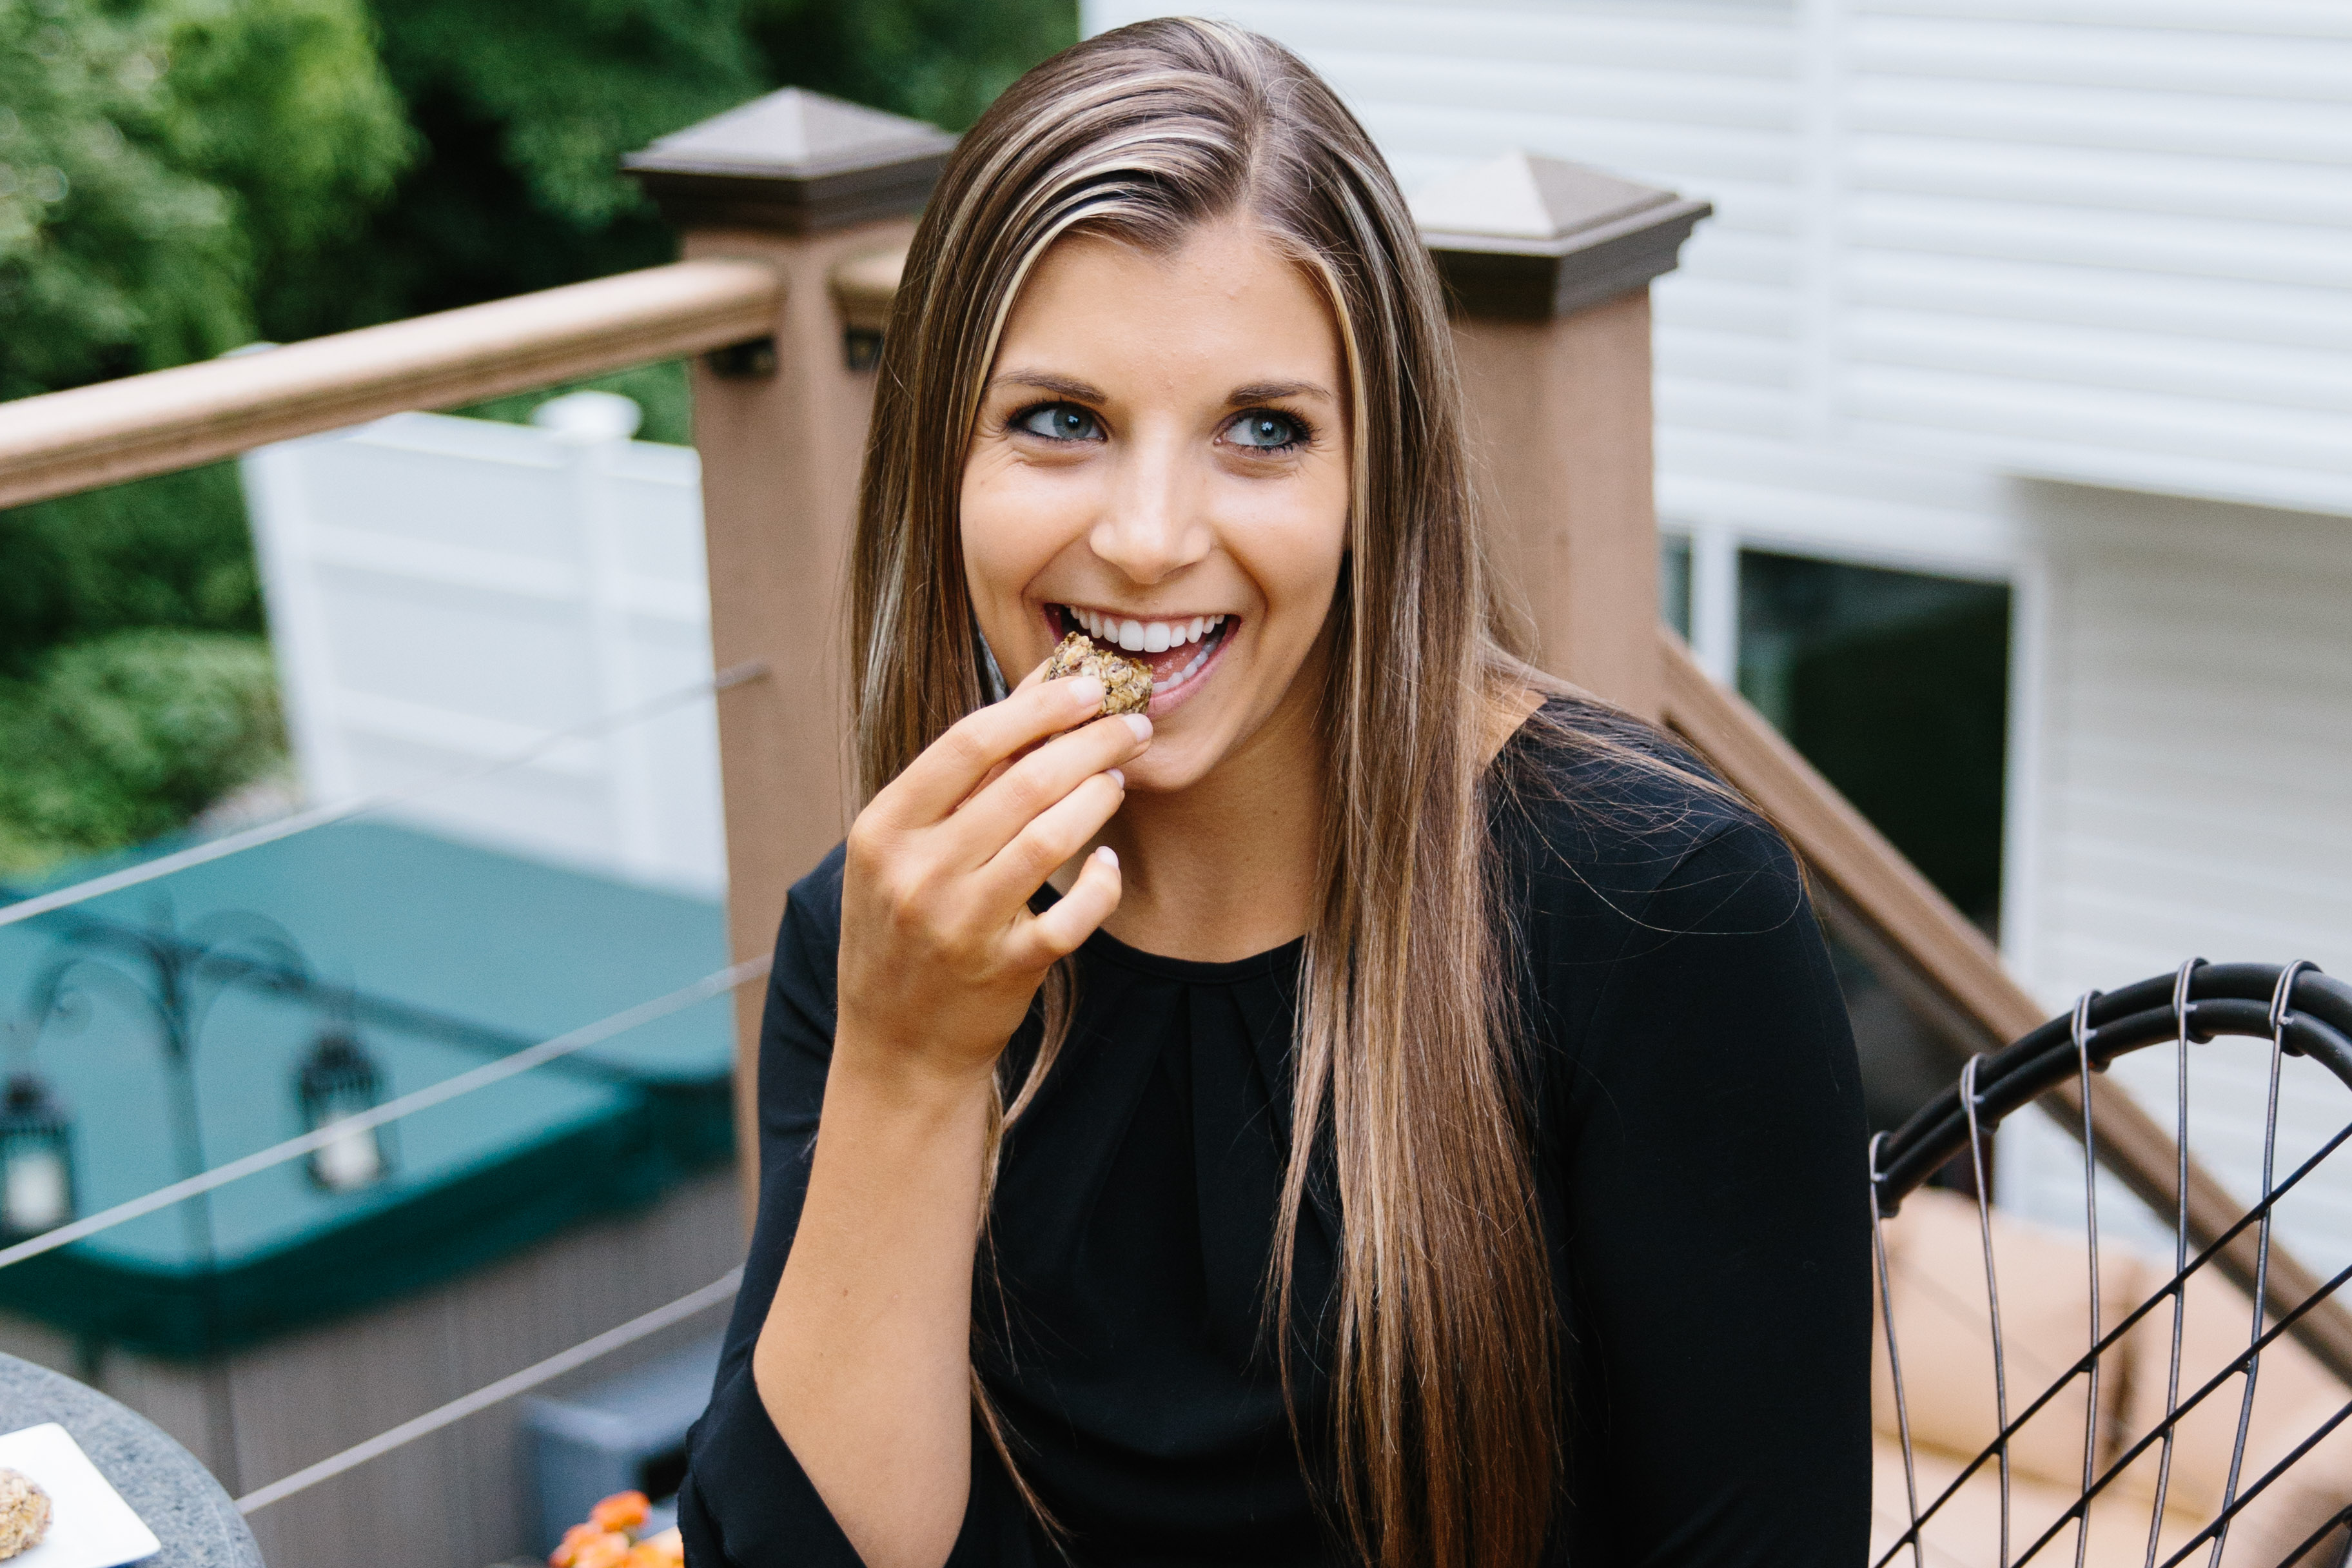 Advertising student, Brianna Makaric enjoying one of her BRITE bite snacks